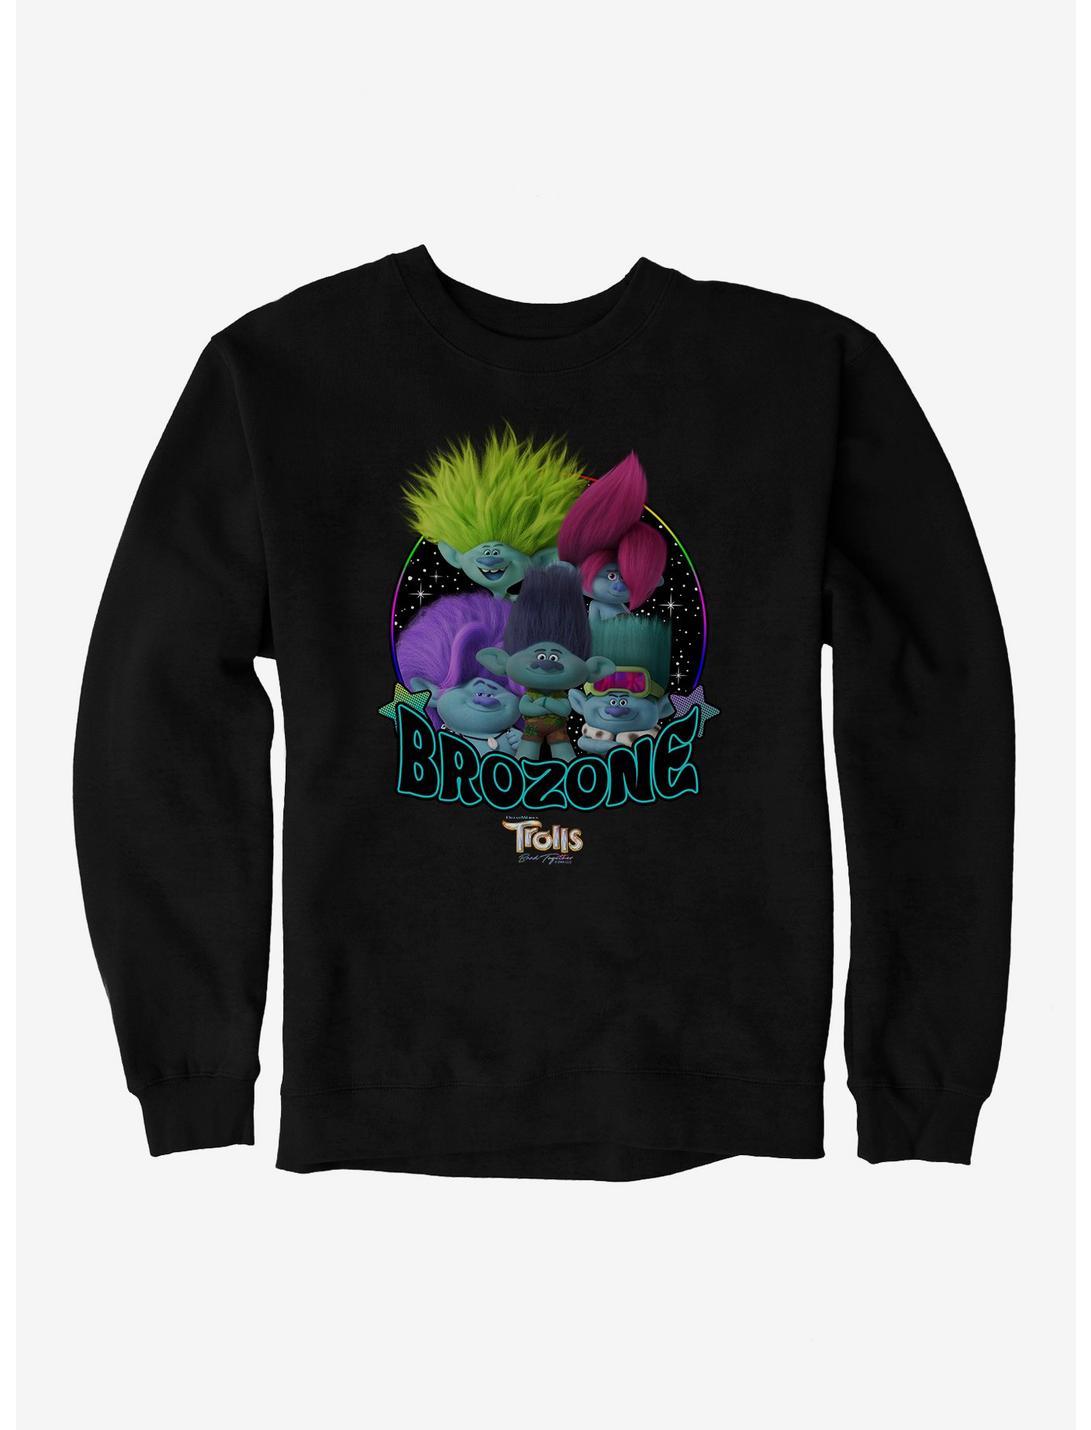 Trolls 3 Band Together Brozone Group Sweatshirt, BLACK, hi-res